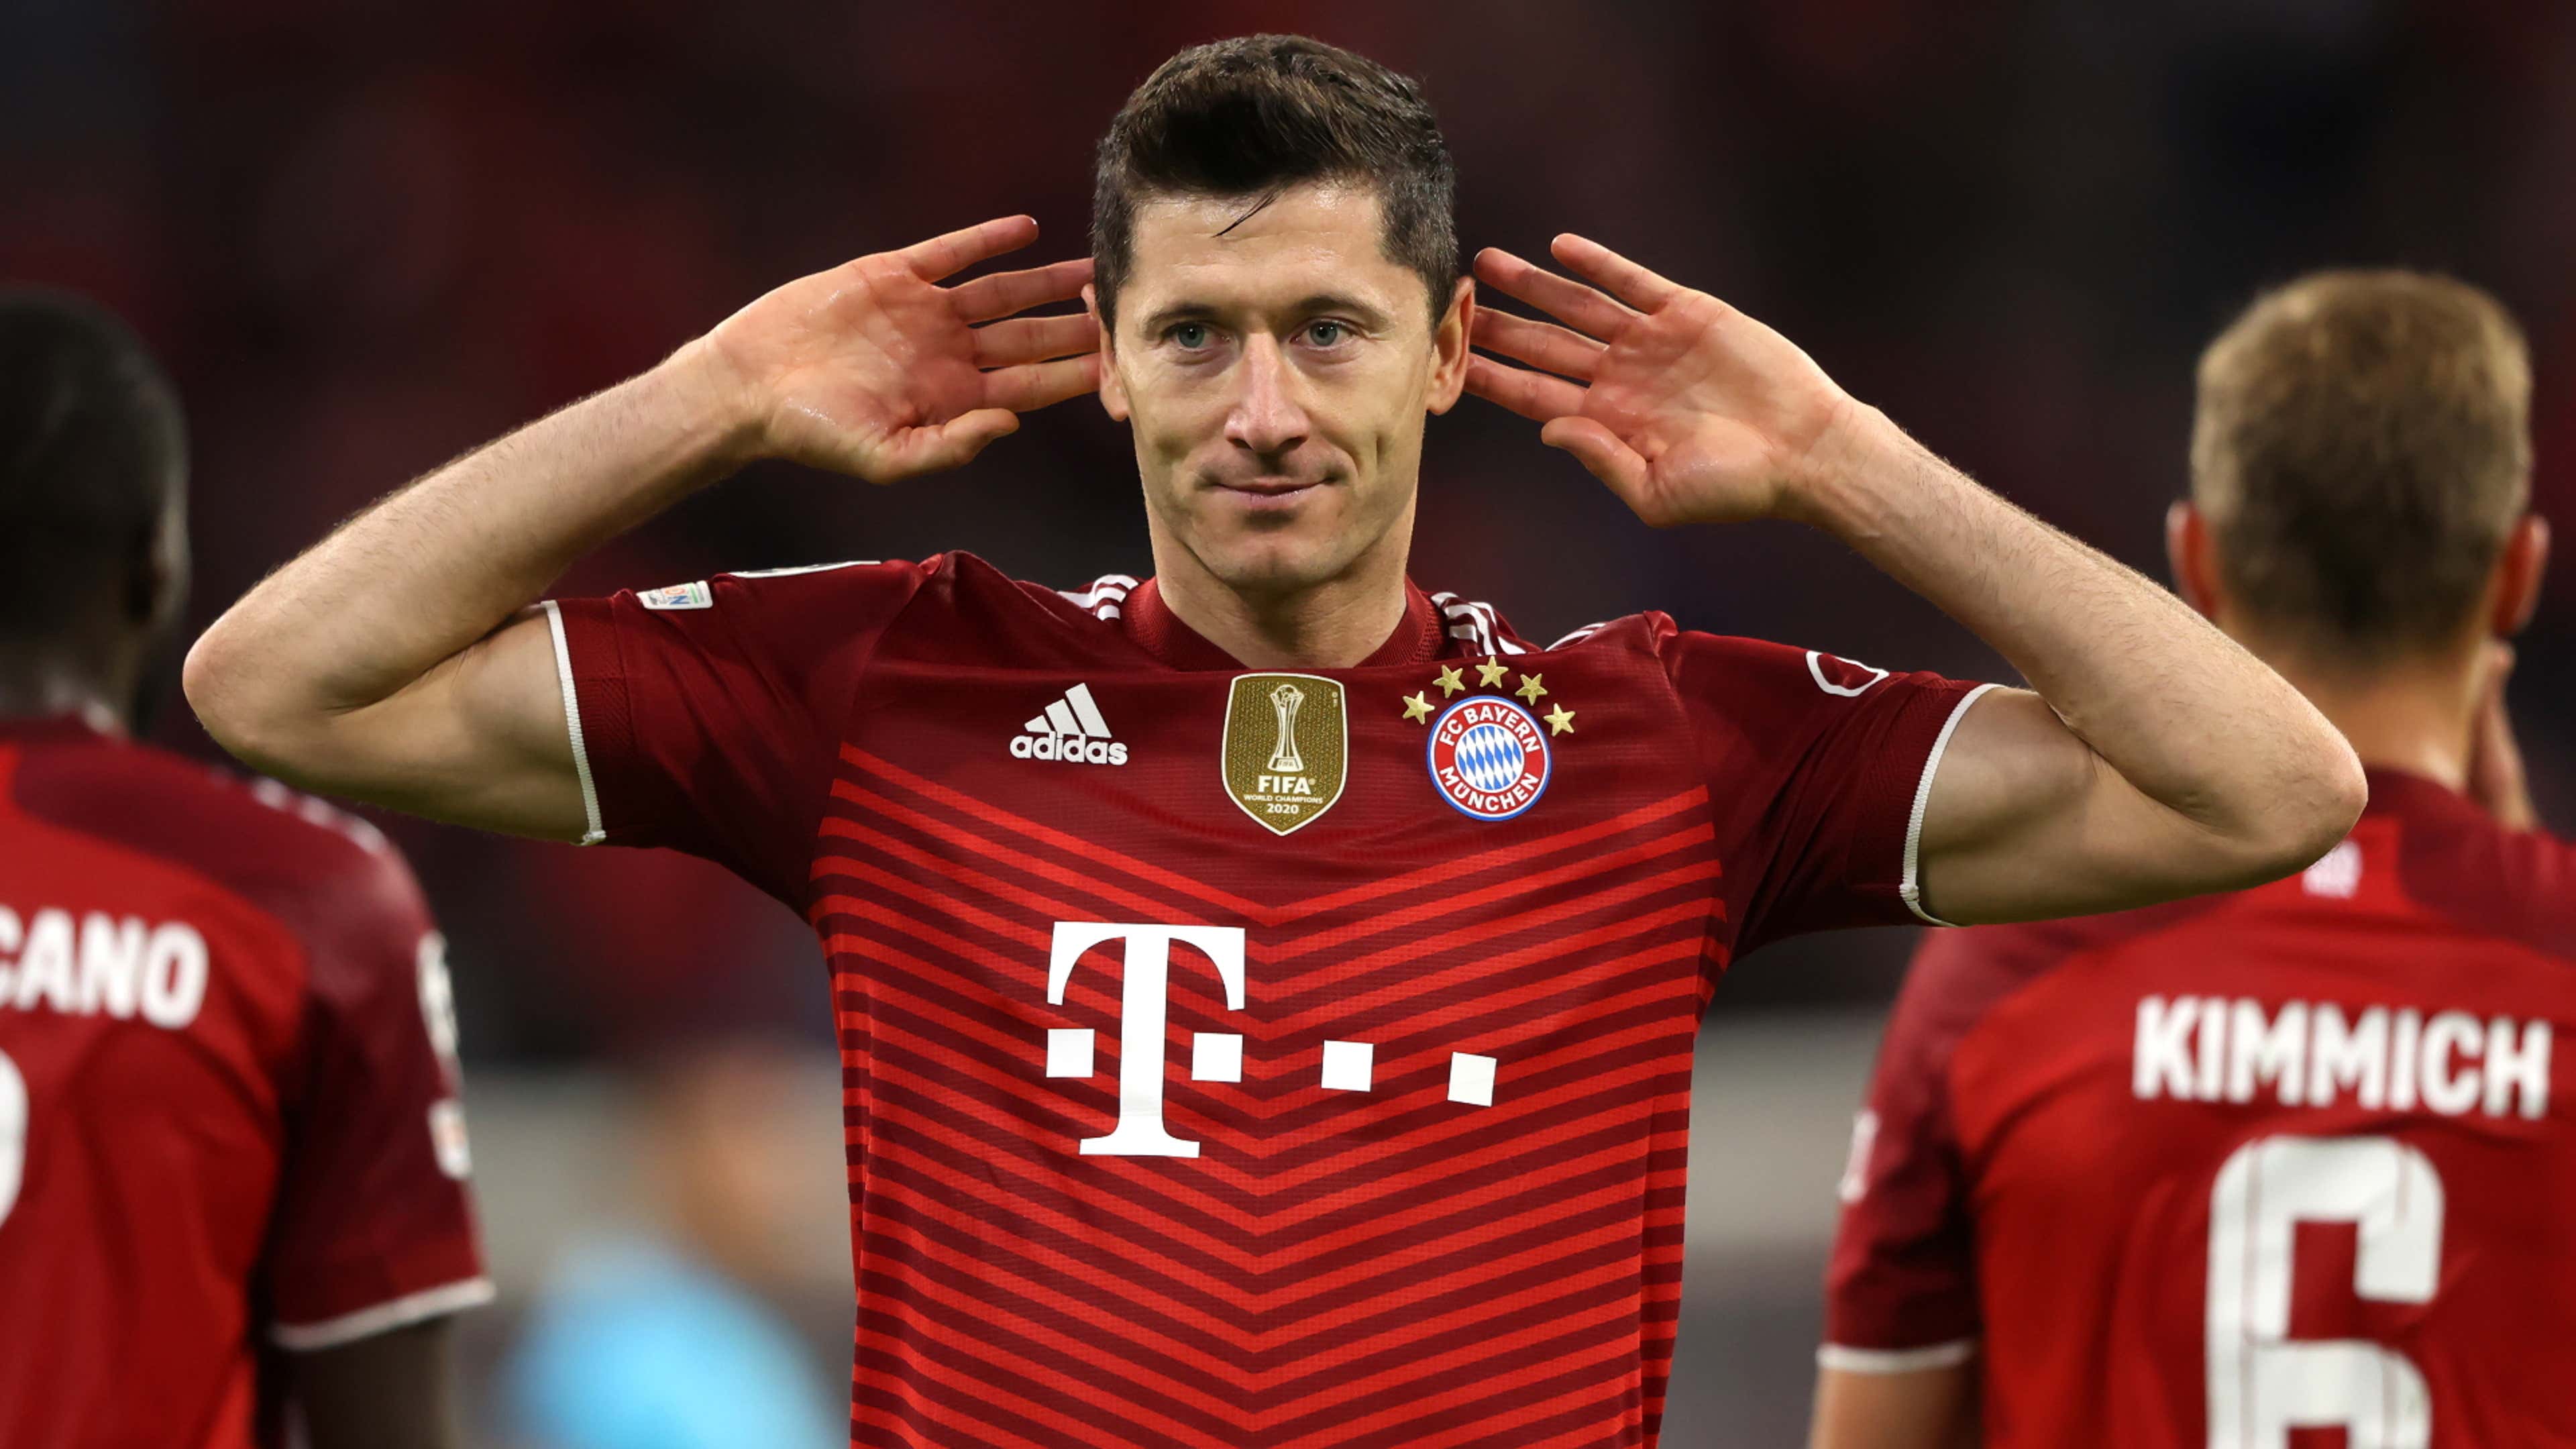 310: FC Bayern – Behind the Legend: So entstand die neue  Prime  Doku - Sports Maniac